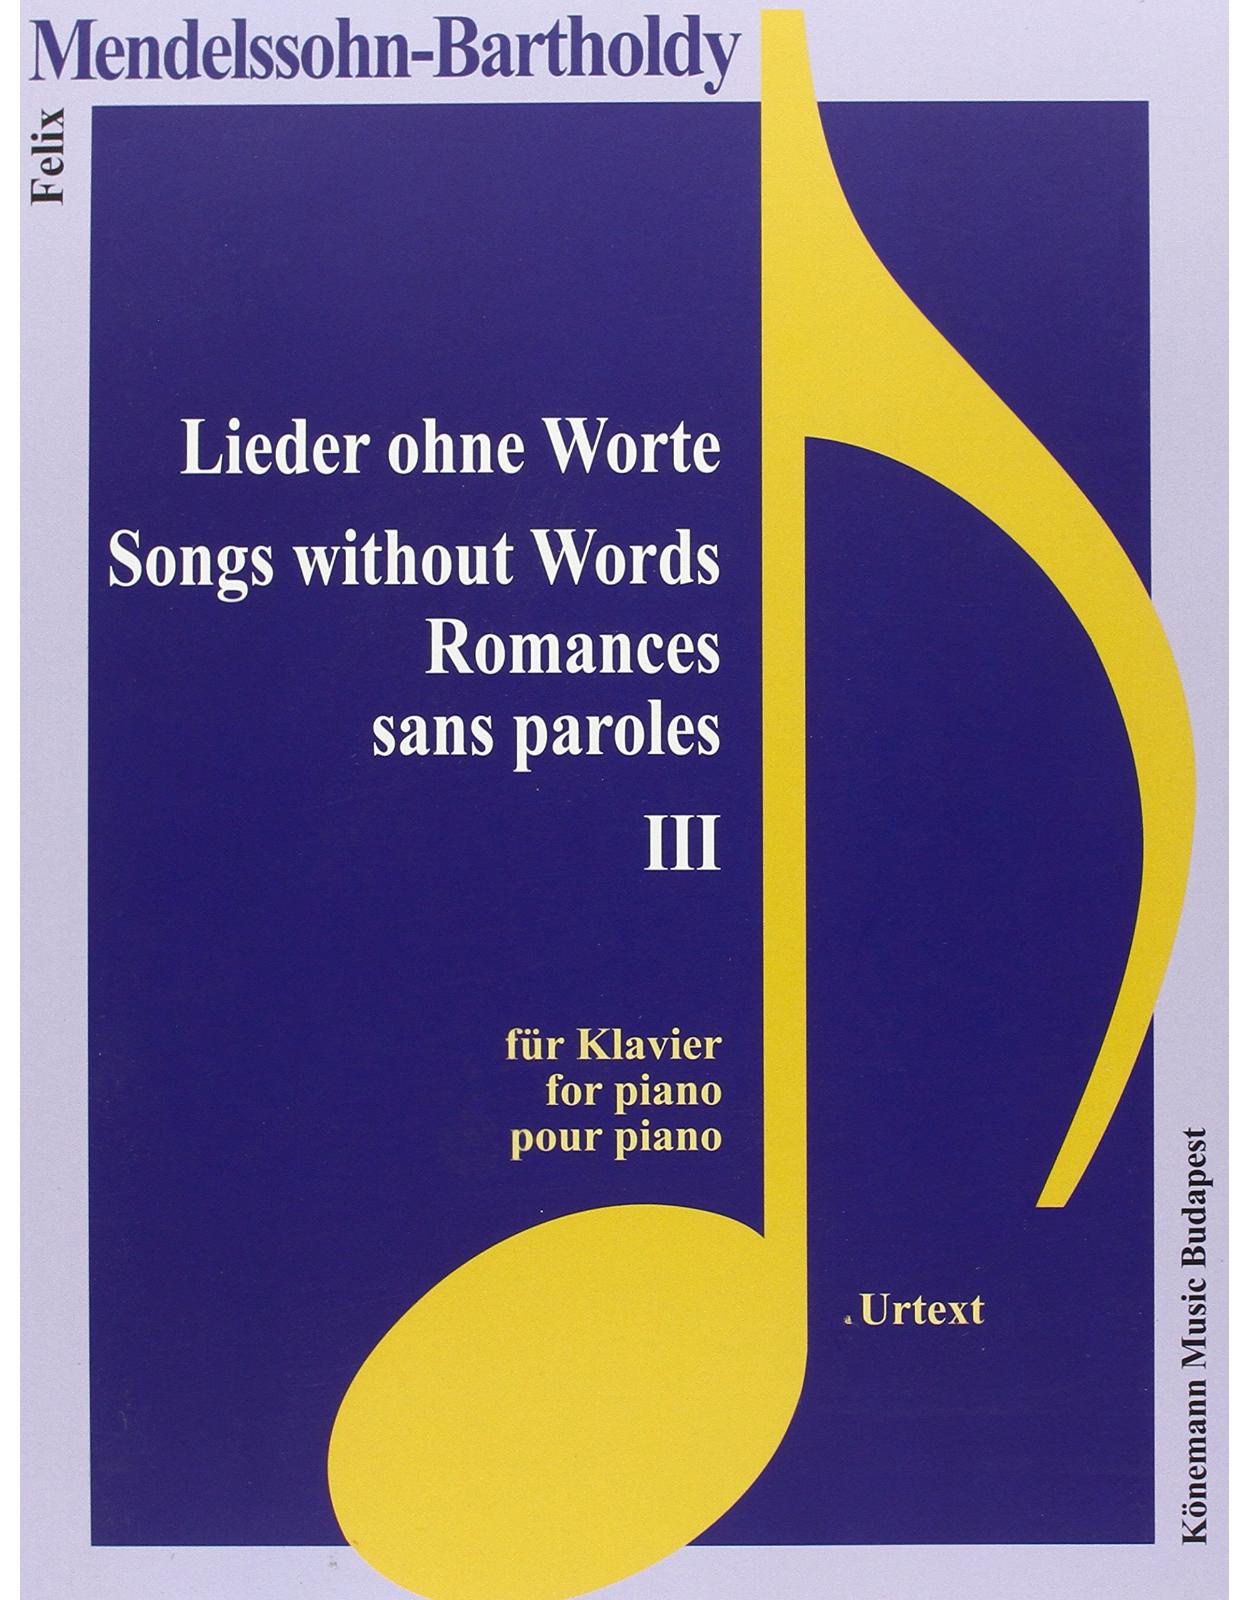 Mendelssohn-Bartholdy, Lieder ohne Worte III